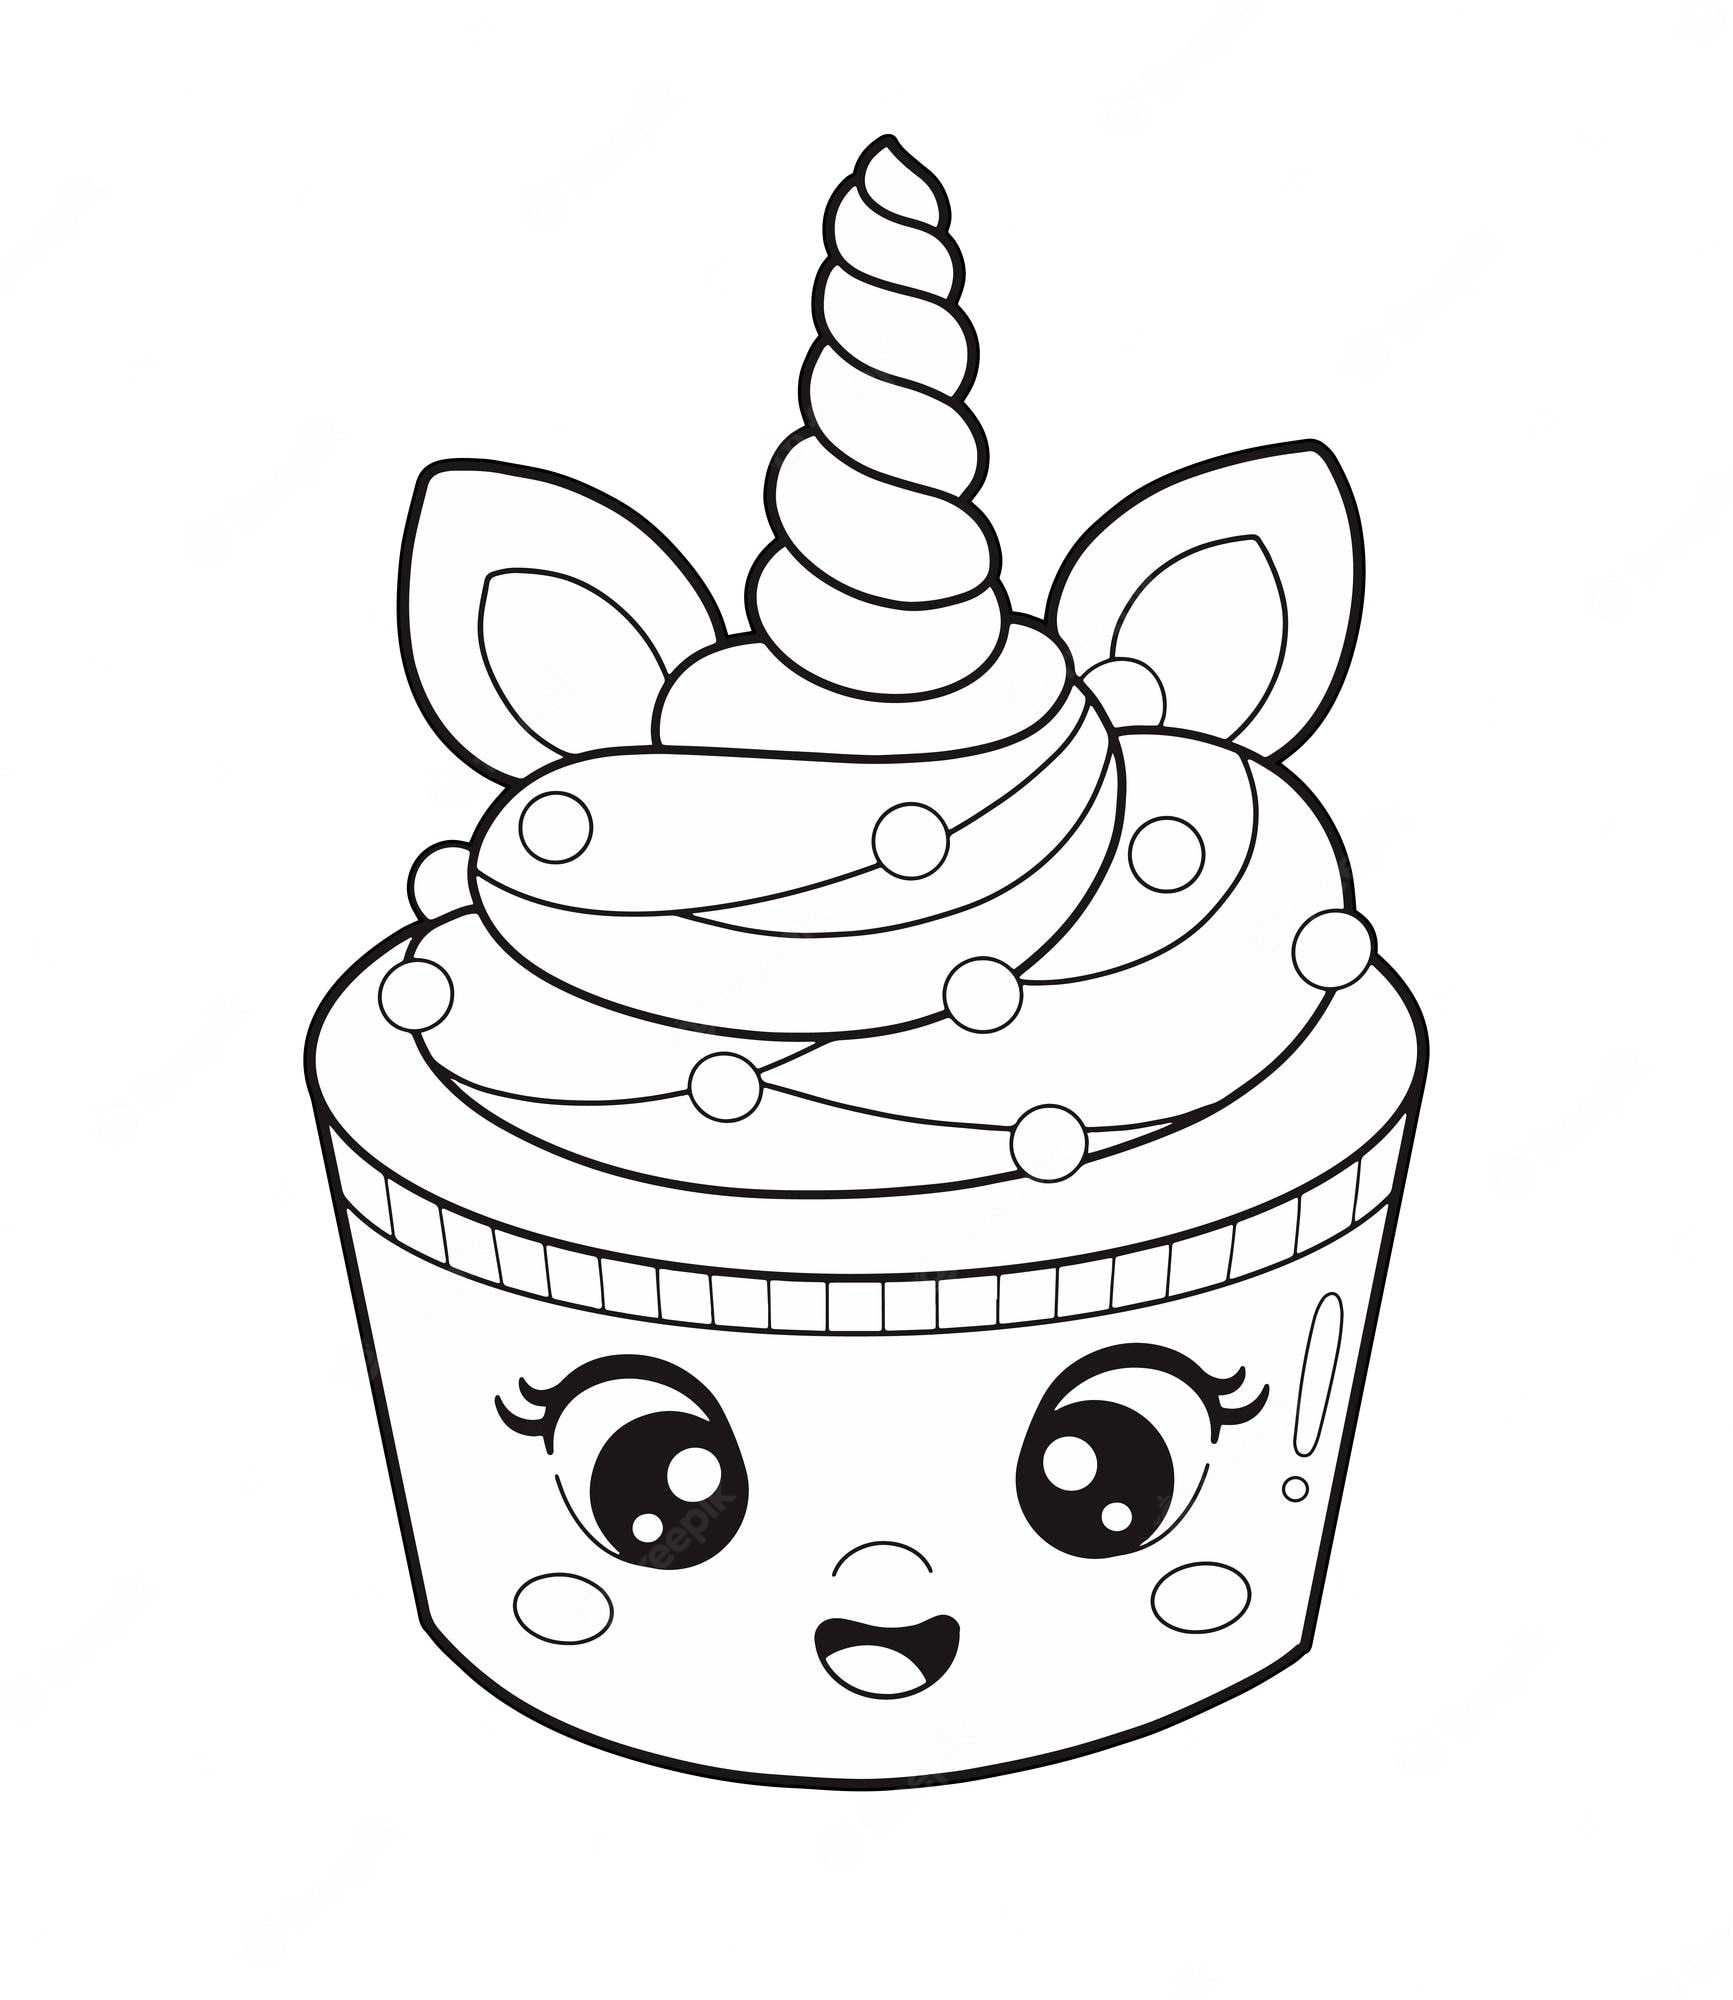 Premium Vector | Cute cartoon unicorn cupcake coloring page